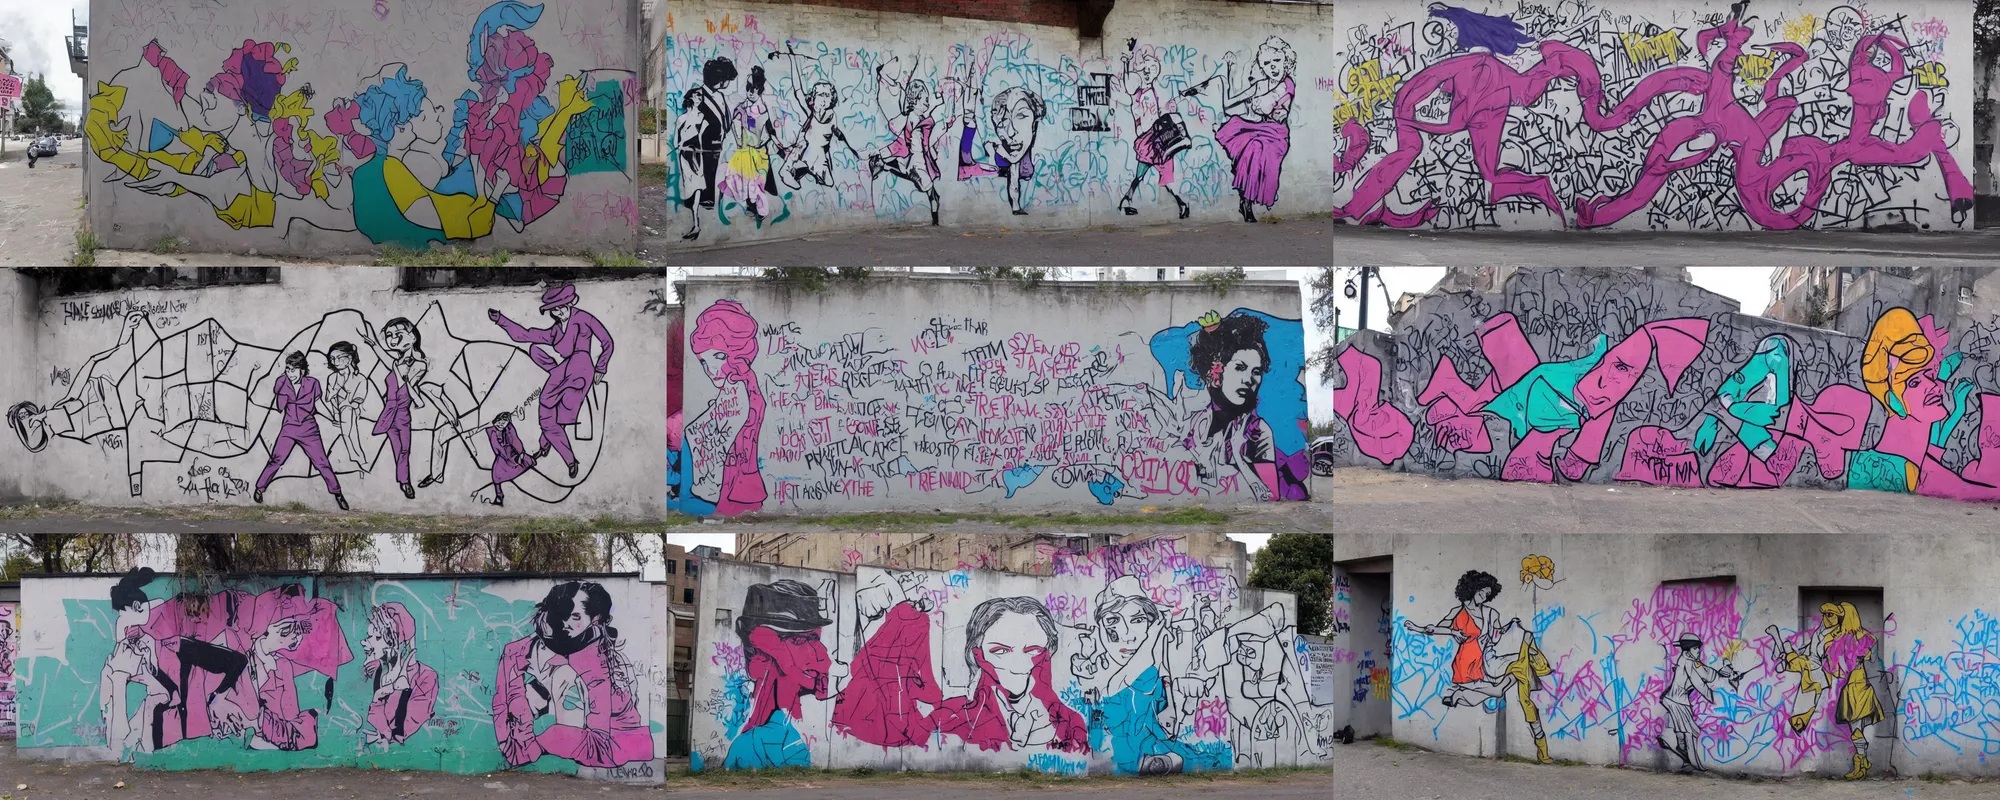 Prompt: feminist street art graffiti inspired by the suffragist movement